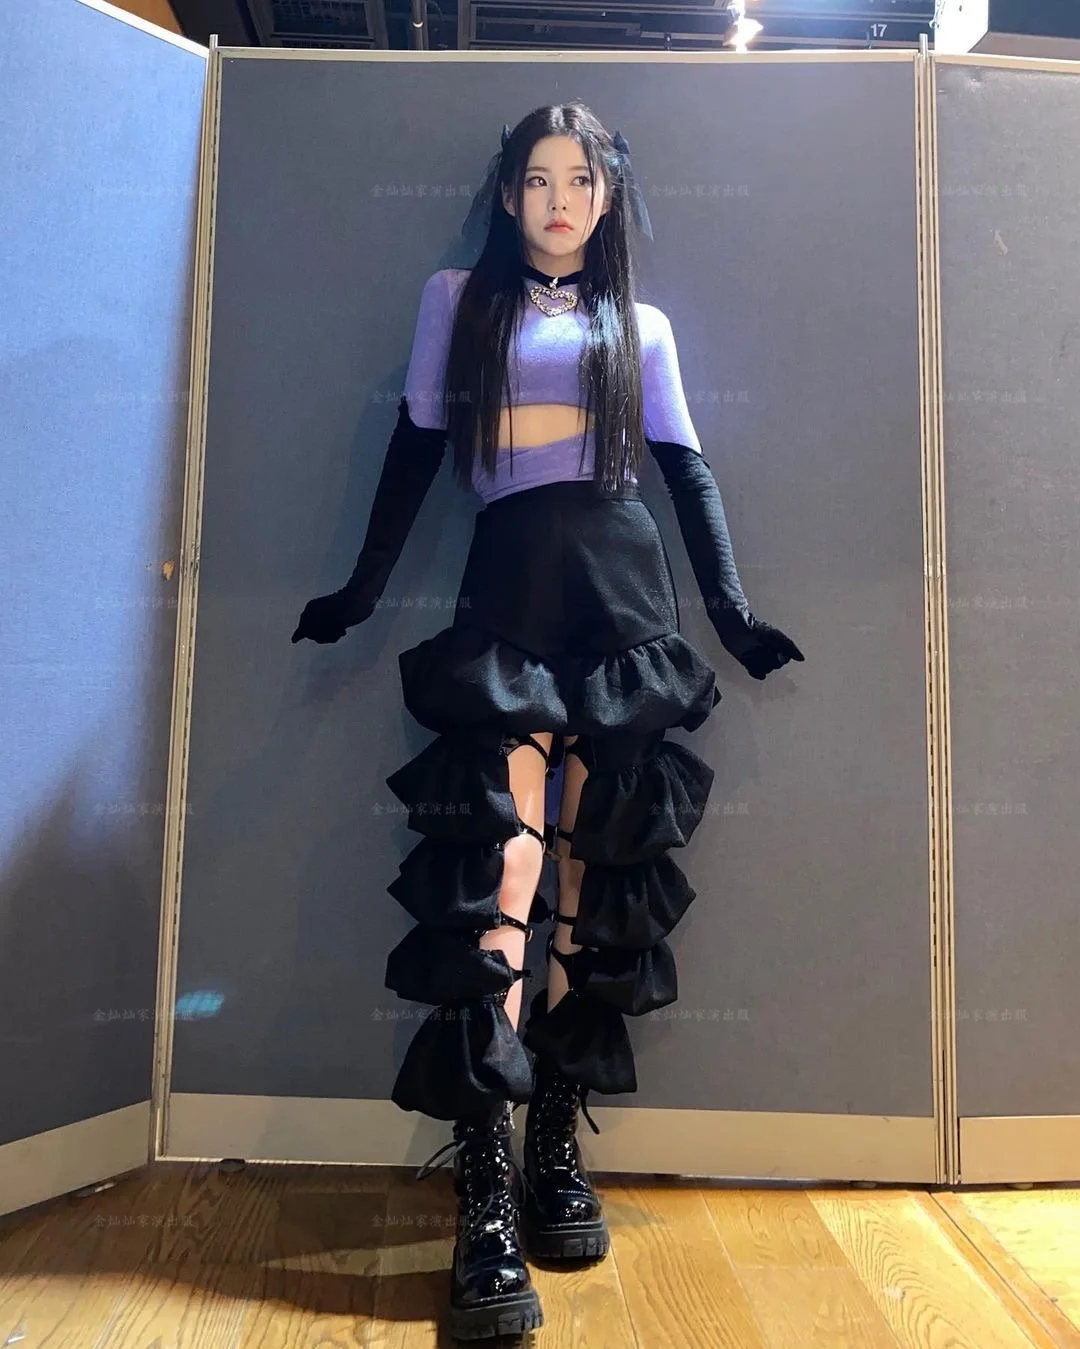 

Kpop Korea Celebrity Women Black Hollow Pants Festival Clothing Rave Jazz Dancewear Dancer Outfit Concert Outfits Stage Costume